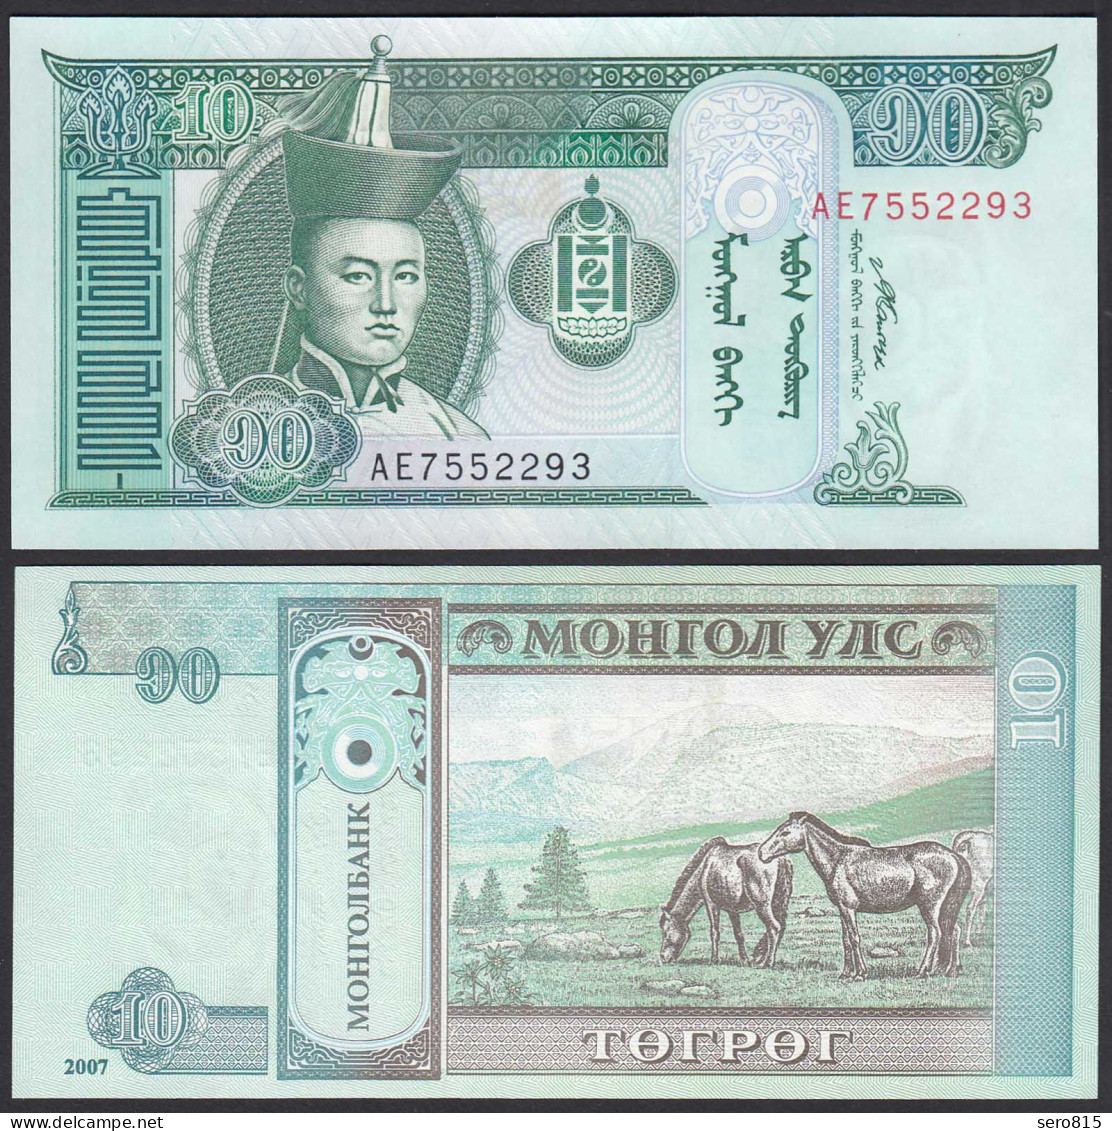 Mongolei - Mongolia 10 Tugrik Banknote 1993 Pick 54 UNC (1)   (30163 - Other - Asia